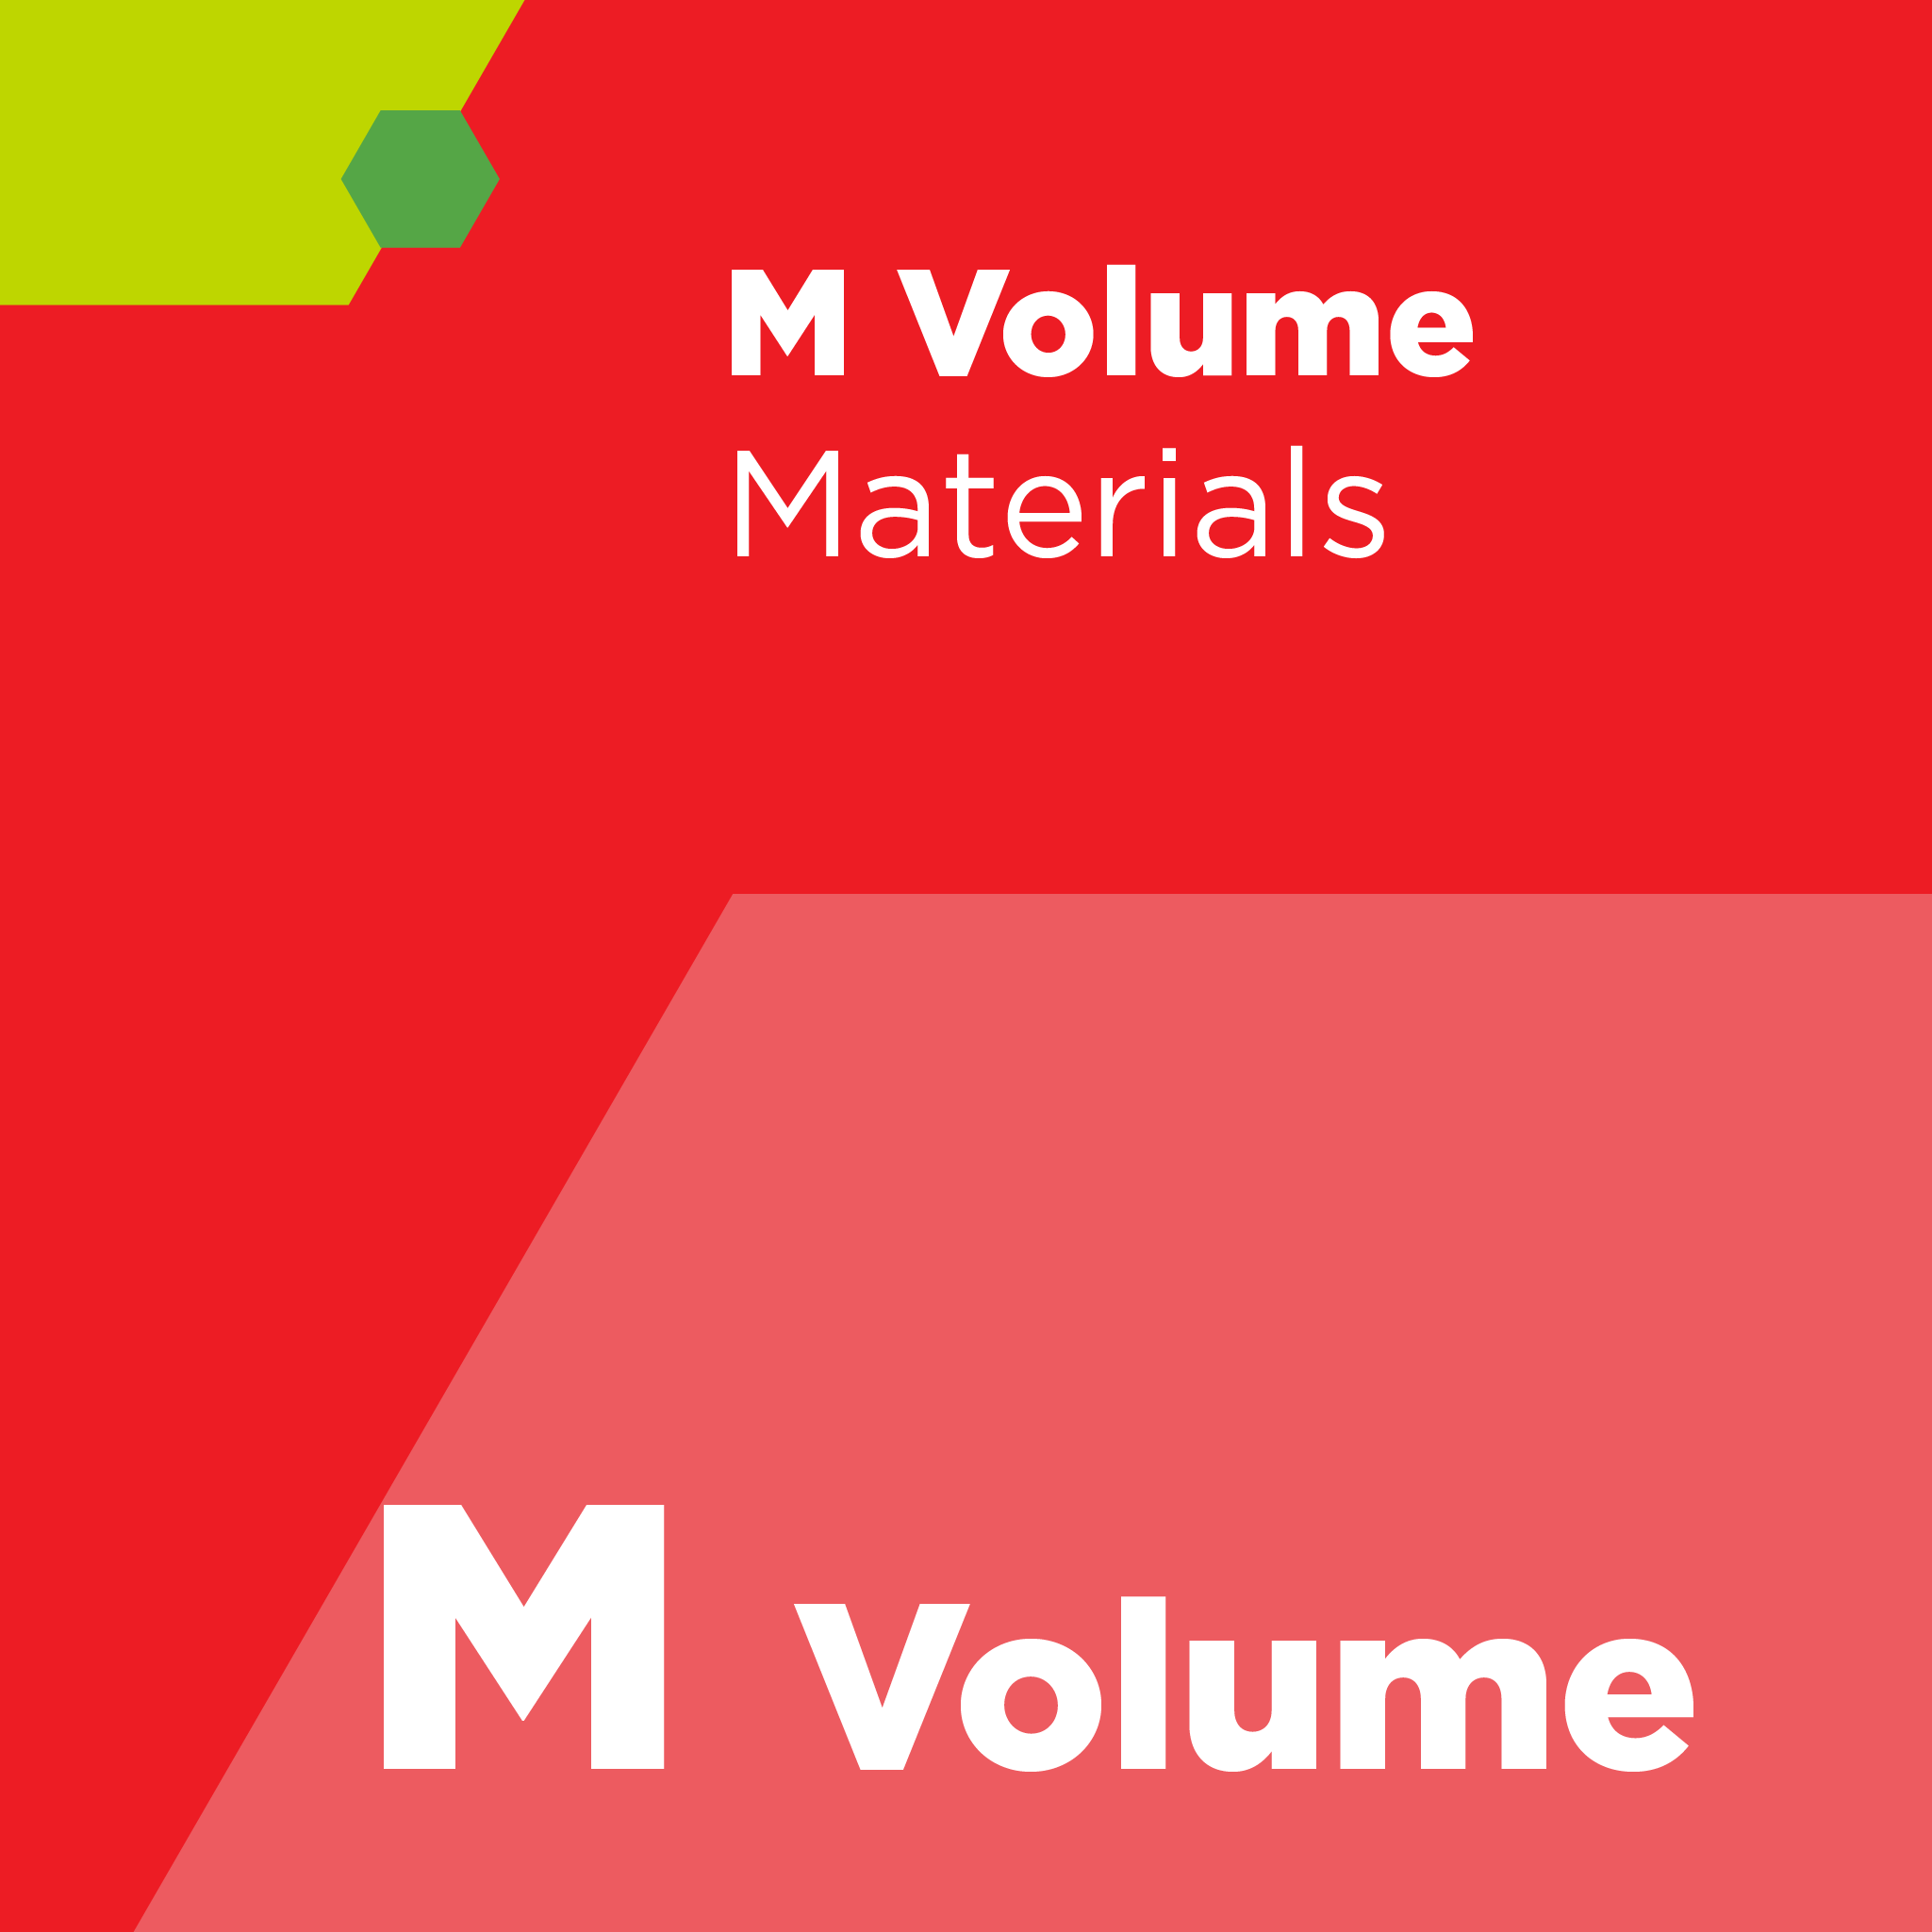 M00900 - SEMI M9 - Specification for Polished Monocrystalline Gallium Arsenide Wafers